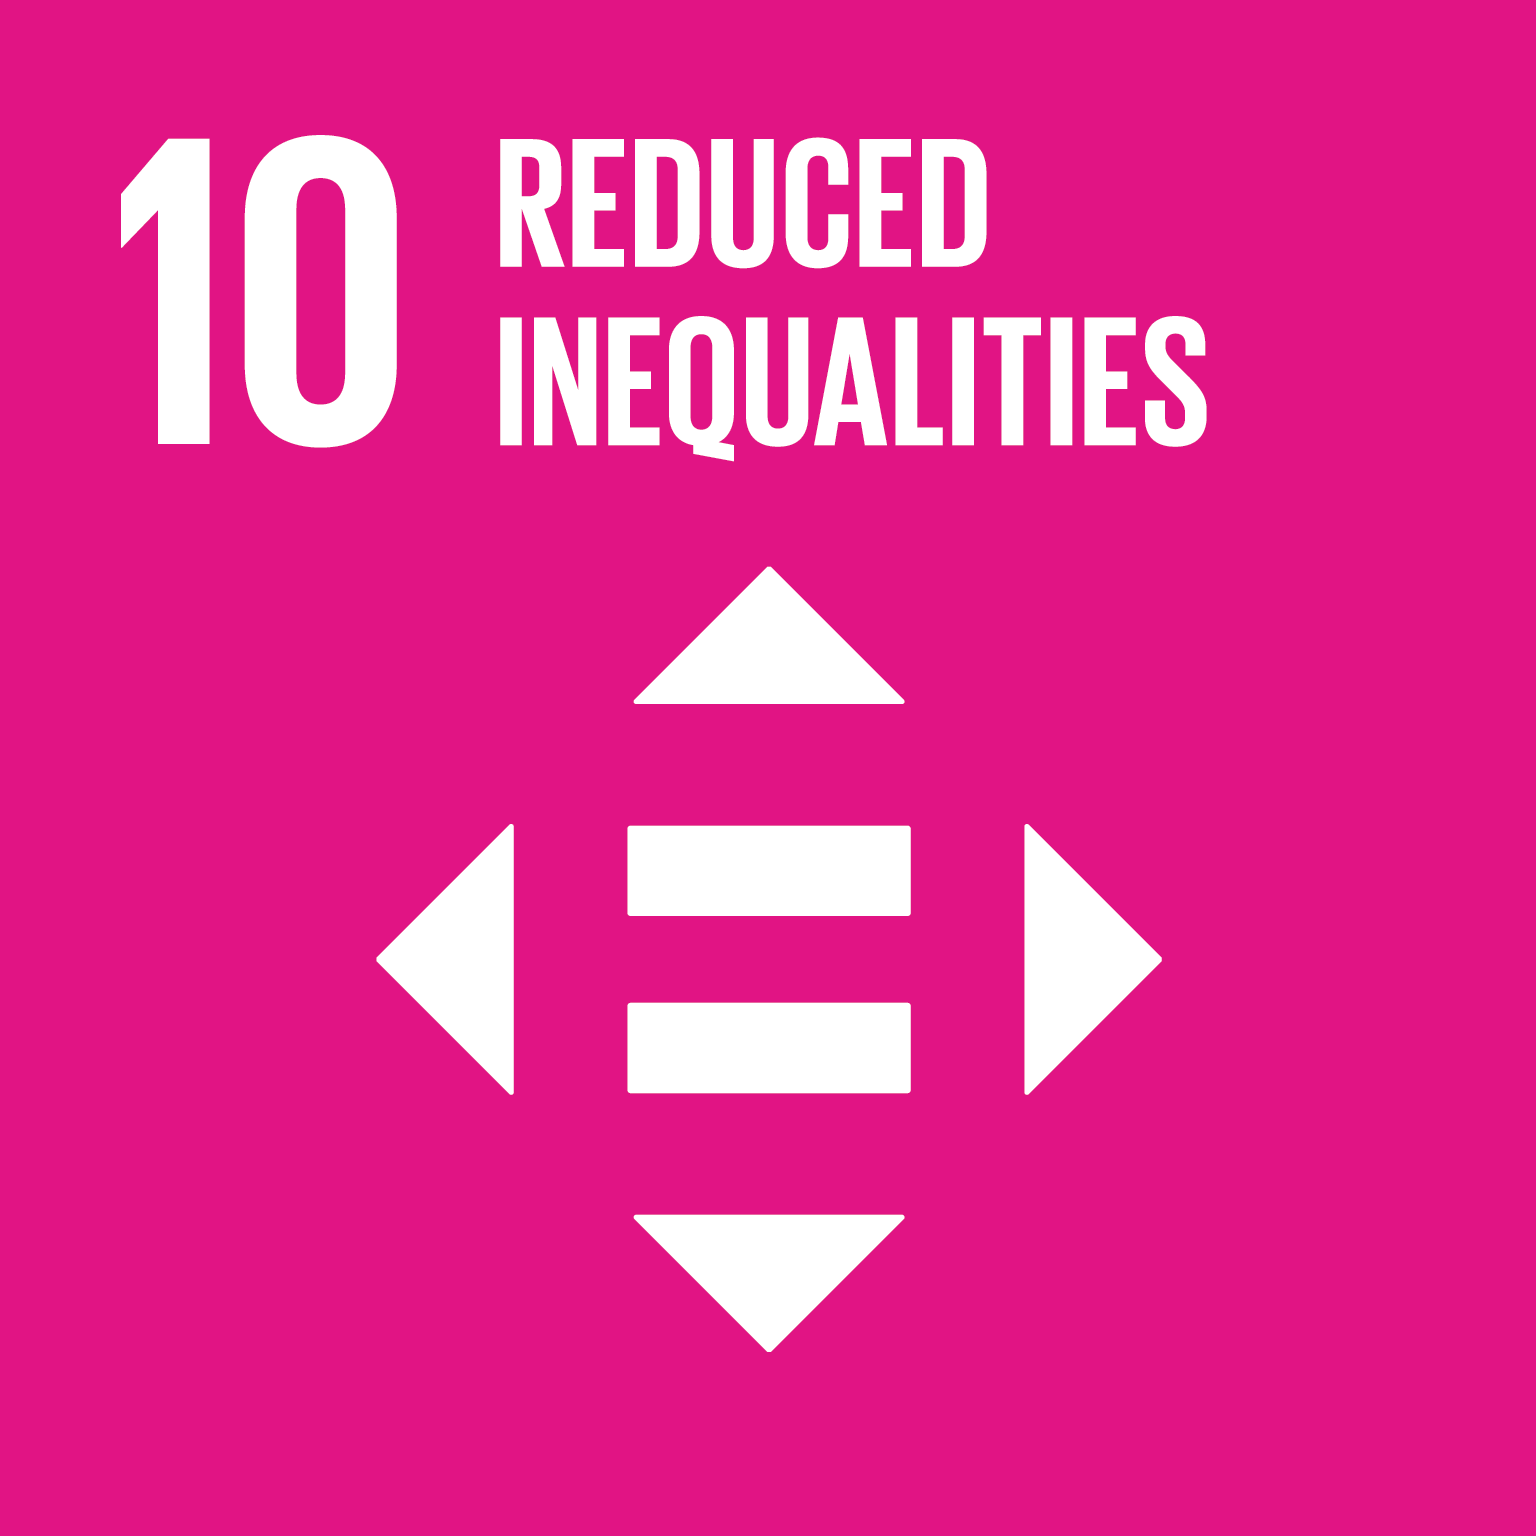 SDG, Reduced inequalities